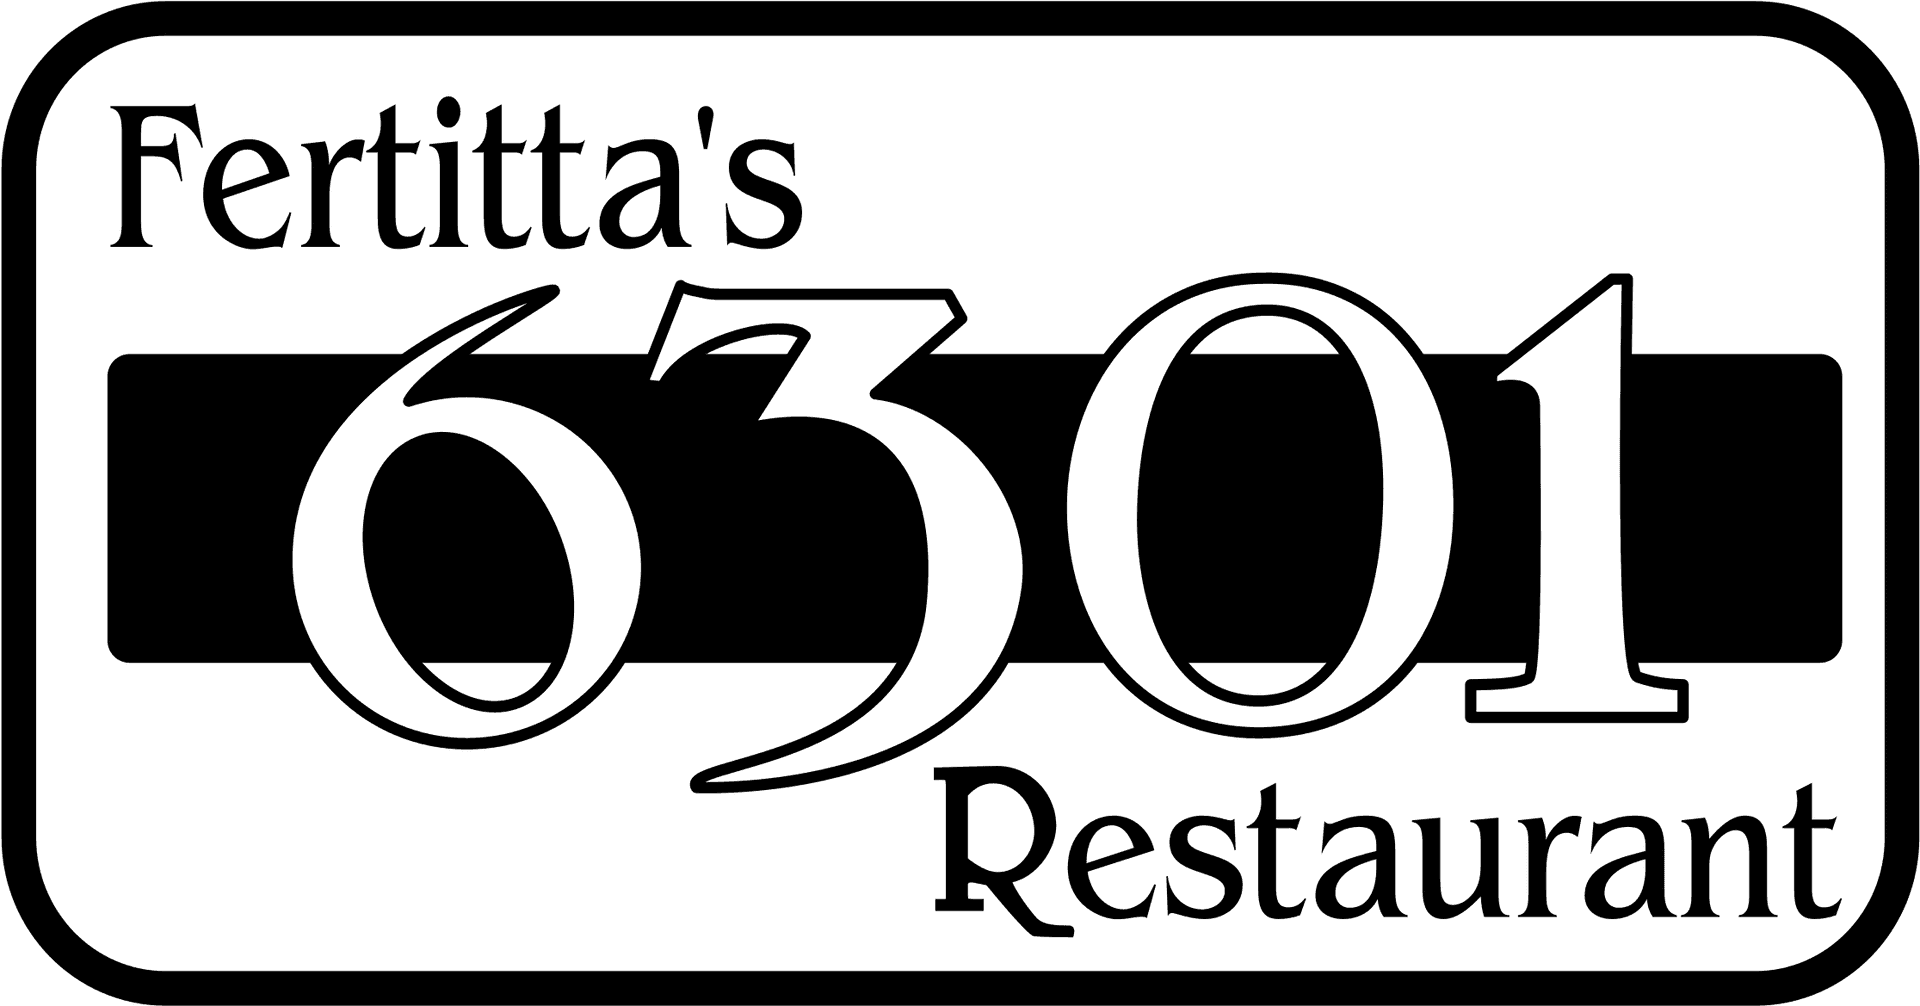 Fertittas6301 Restaurant Logo PNG image